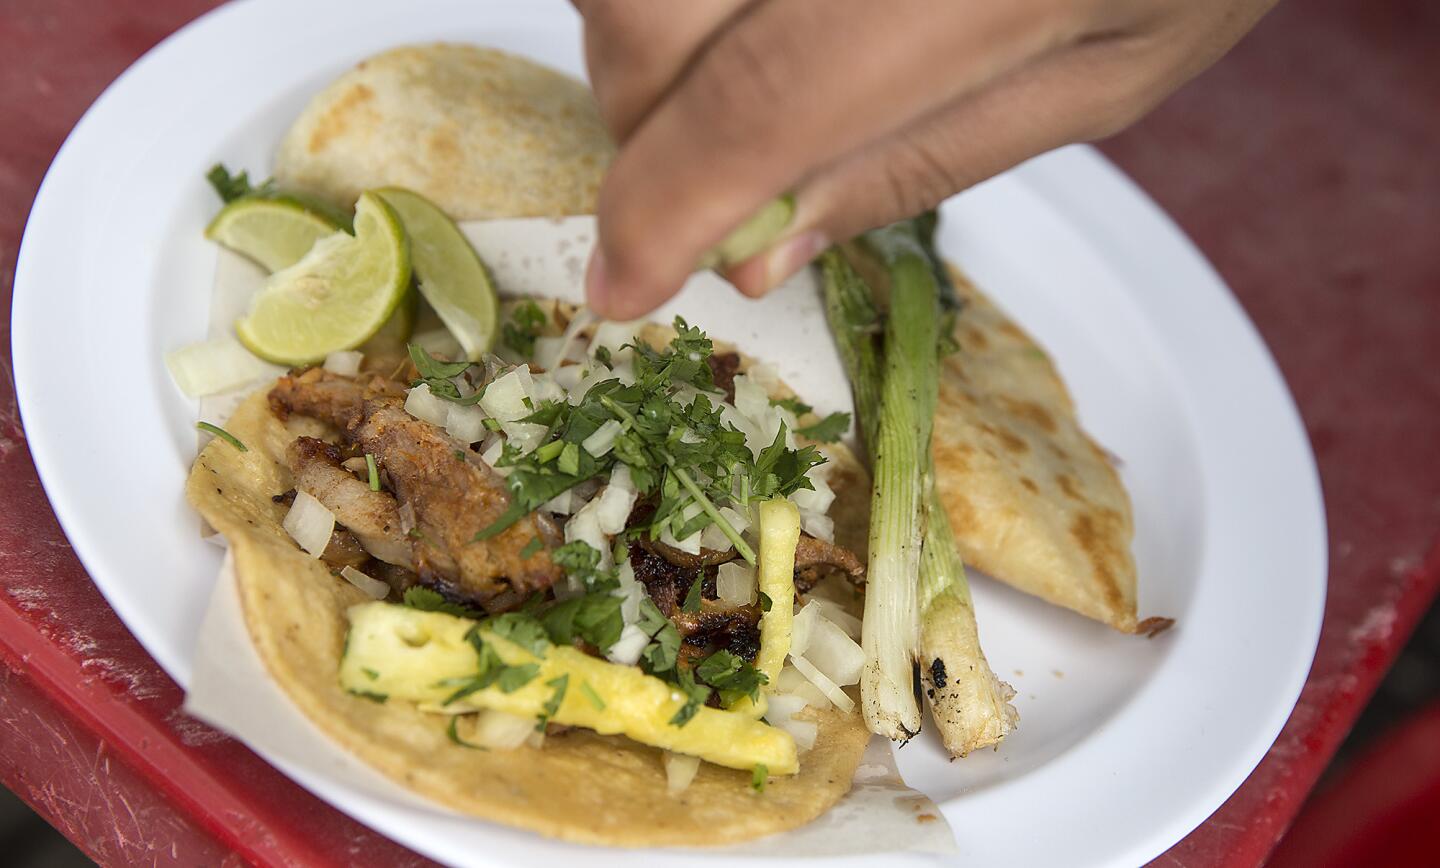 Taco crawl in L.A. with chef Enrique Olvera